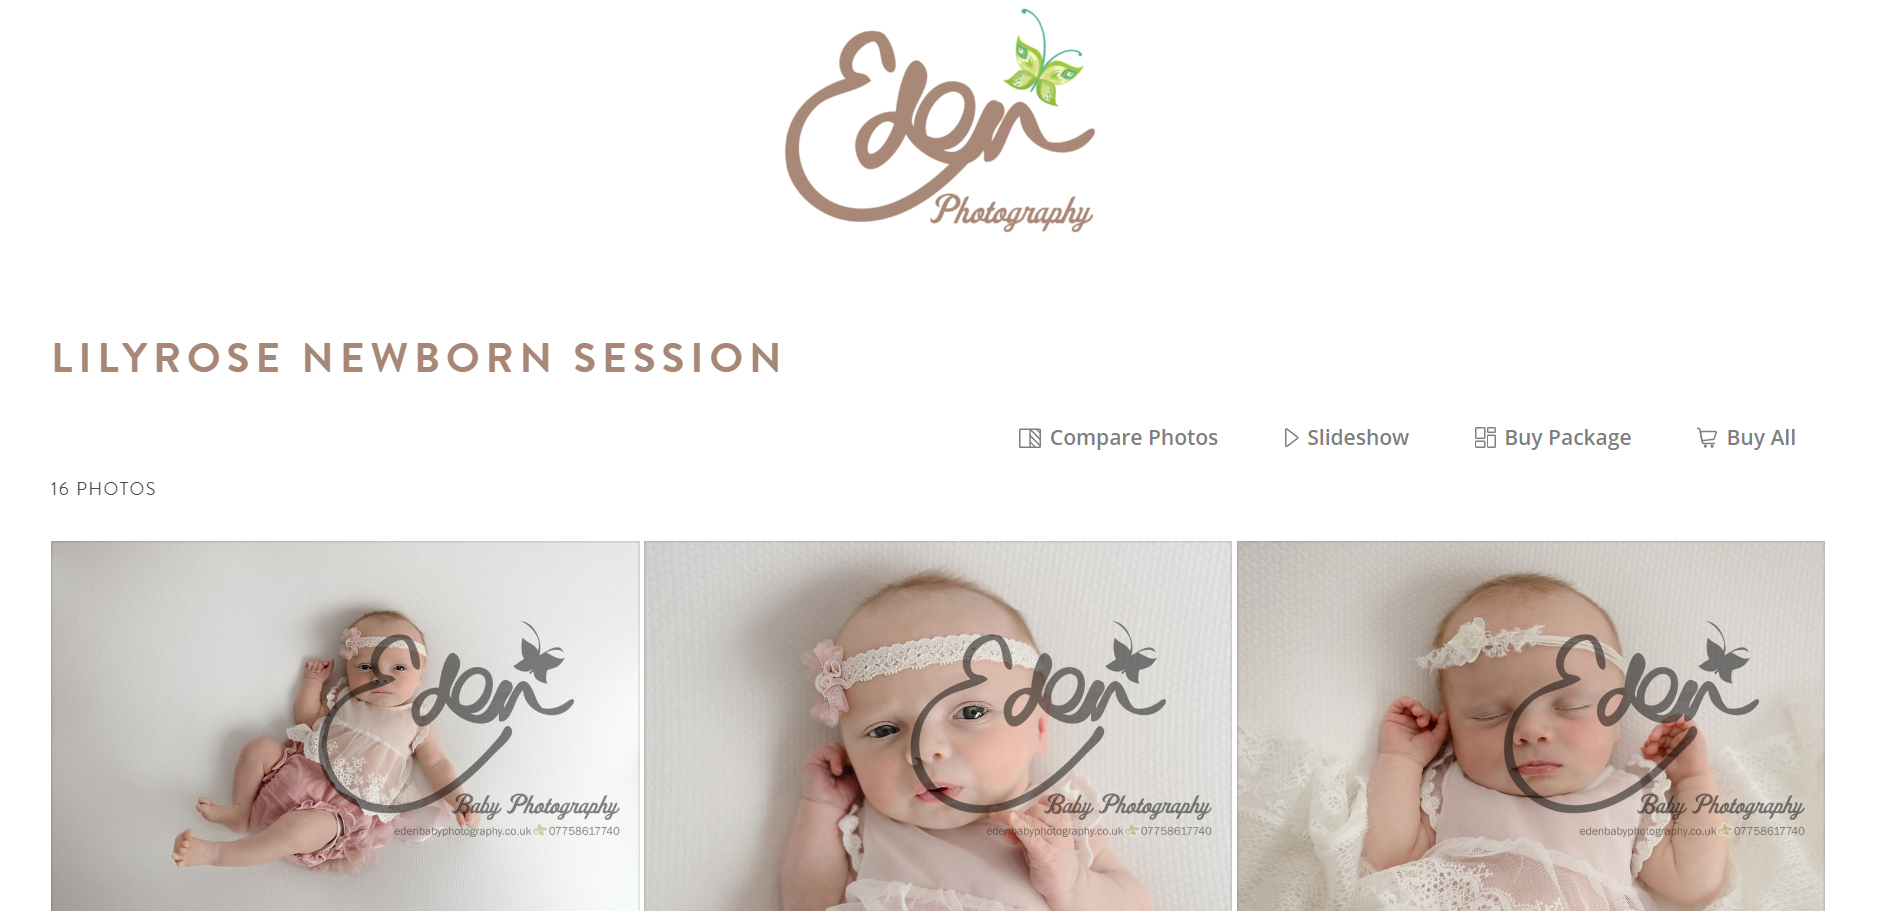 Eden Photography Gallery Screenshot